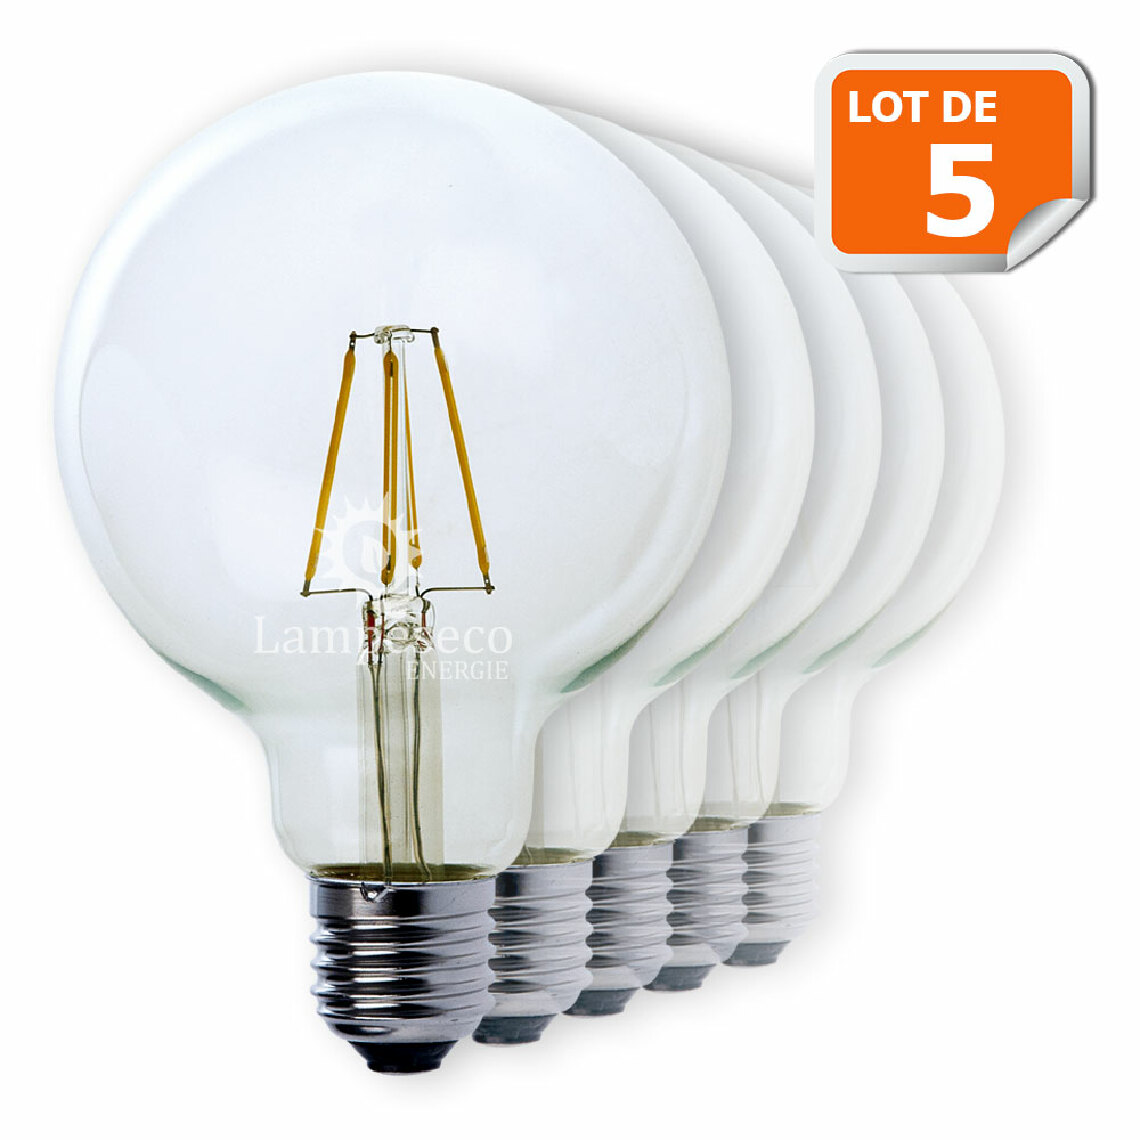 Lampesecoenergie - Lot de 5 Ampoules Led Filament Globe G95 Style Edison 7 watt (eq.52 watt) Culot E27 - Ampoules LED